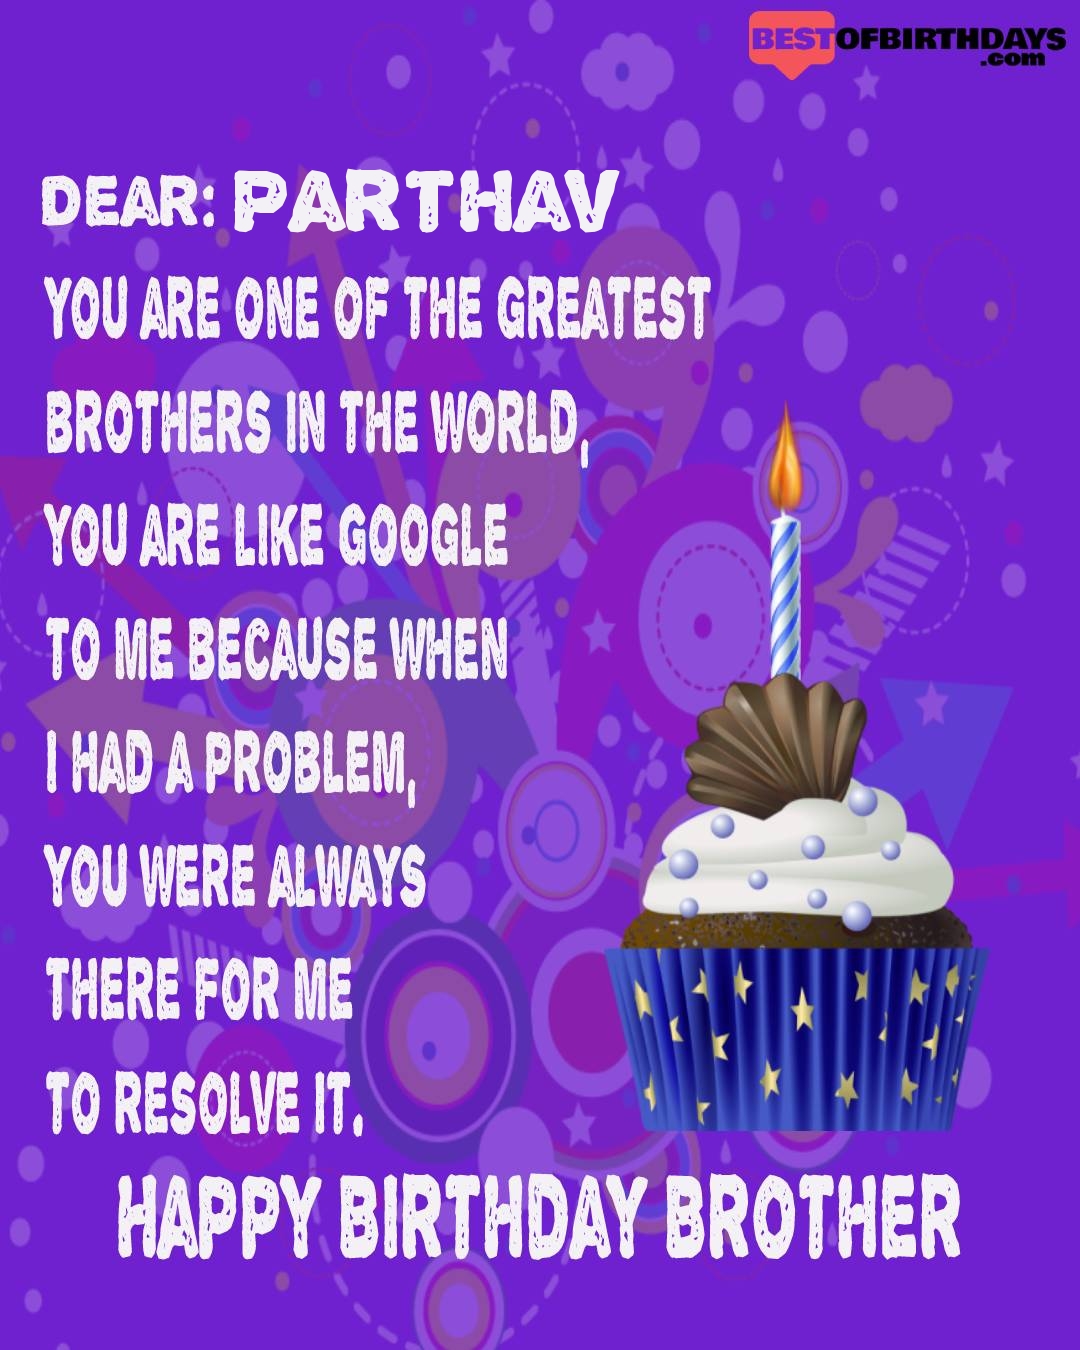 Happy birthday parthav bhai brother bro